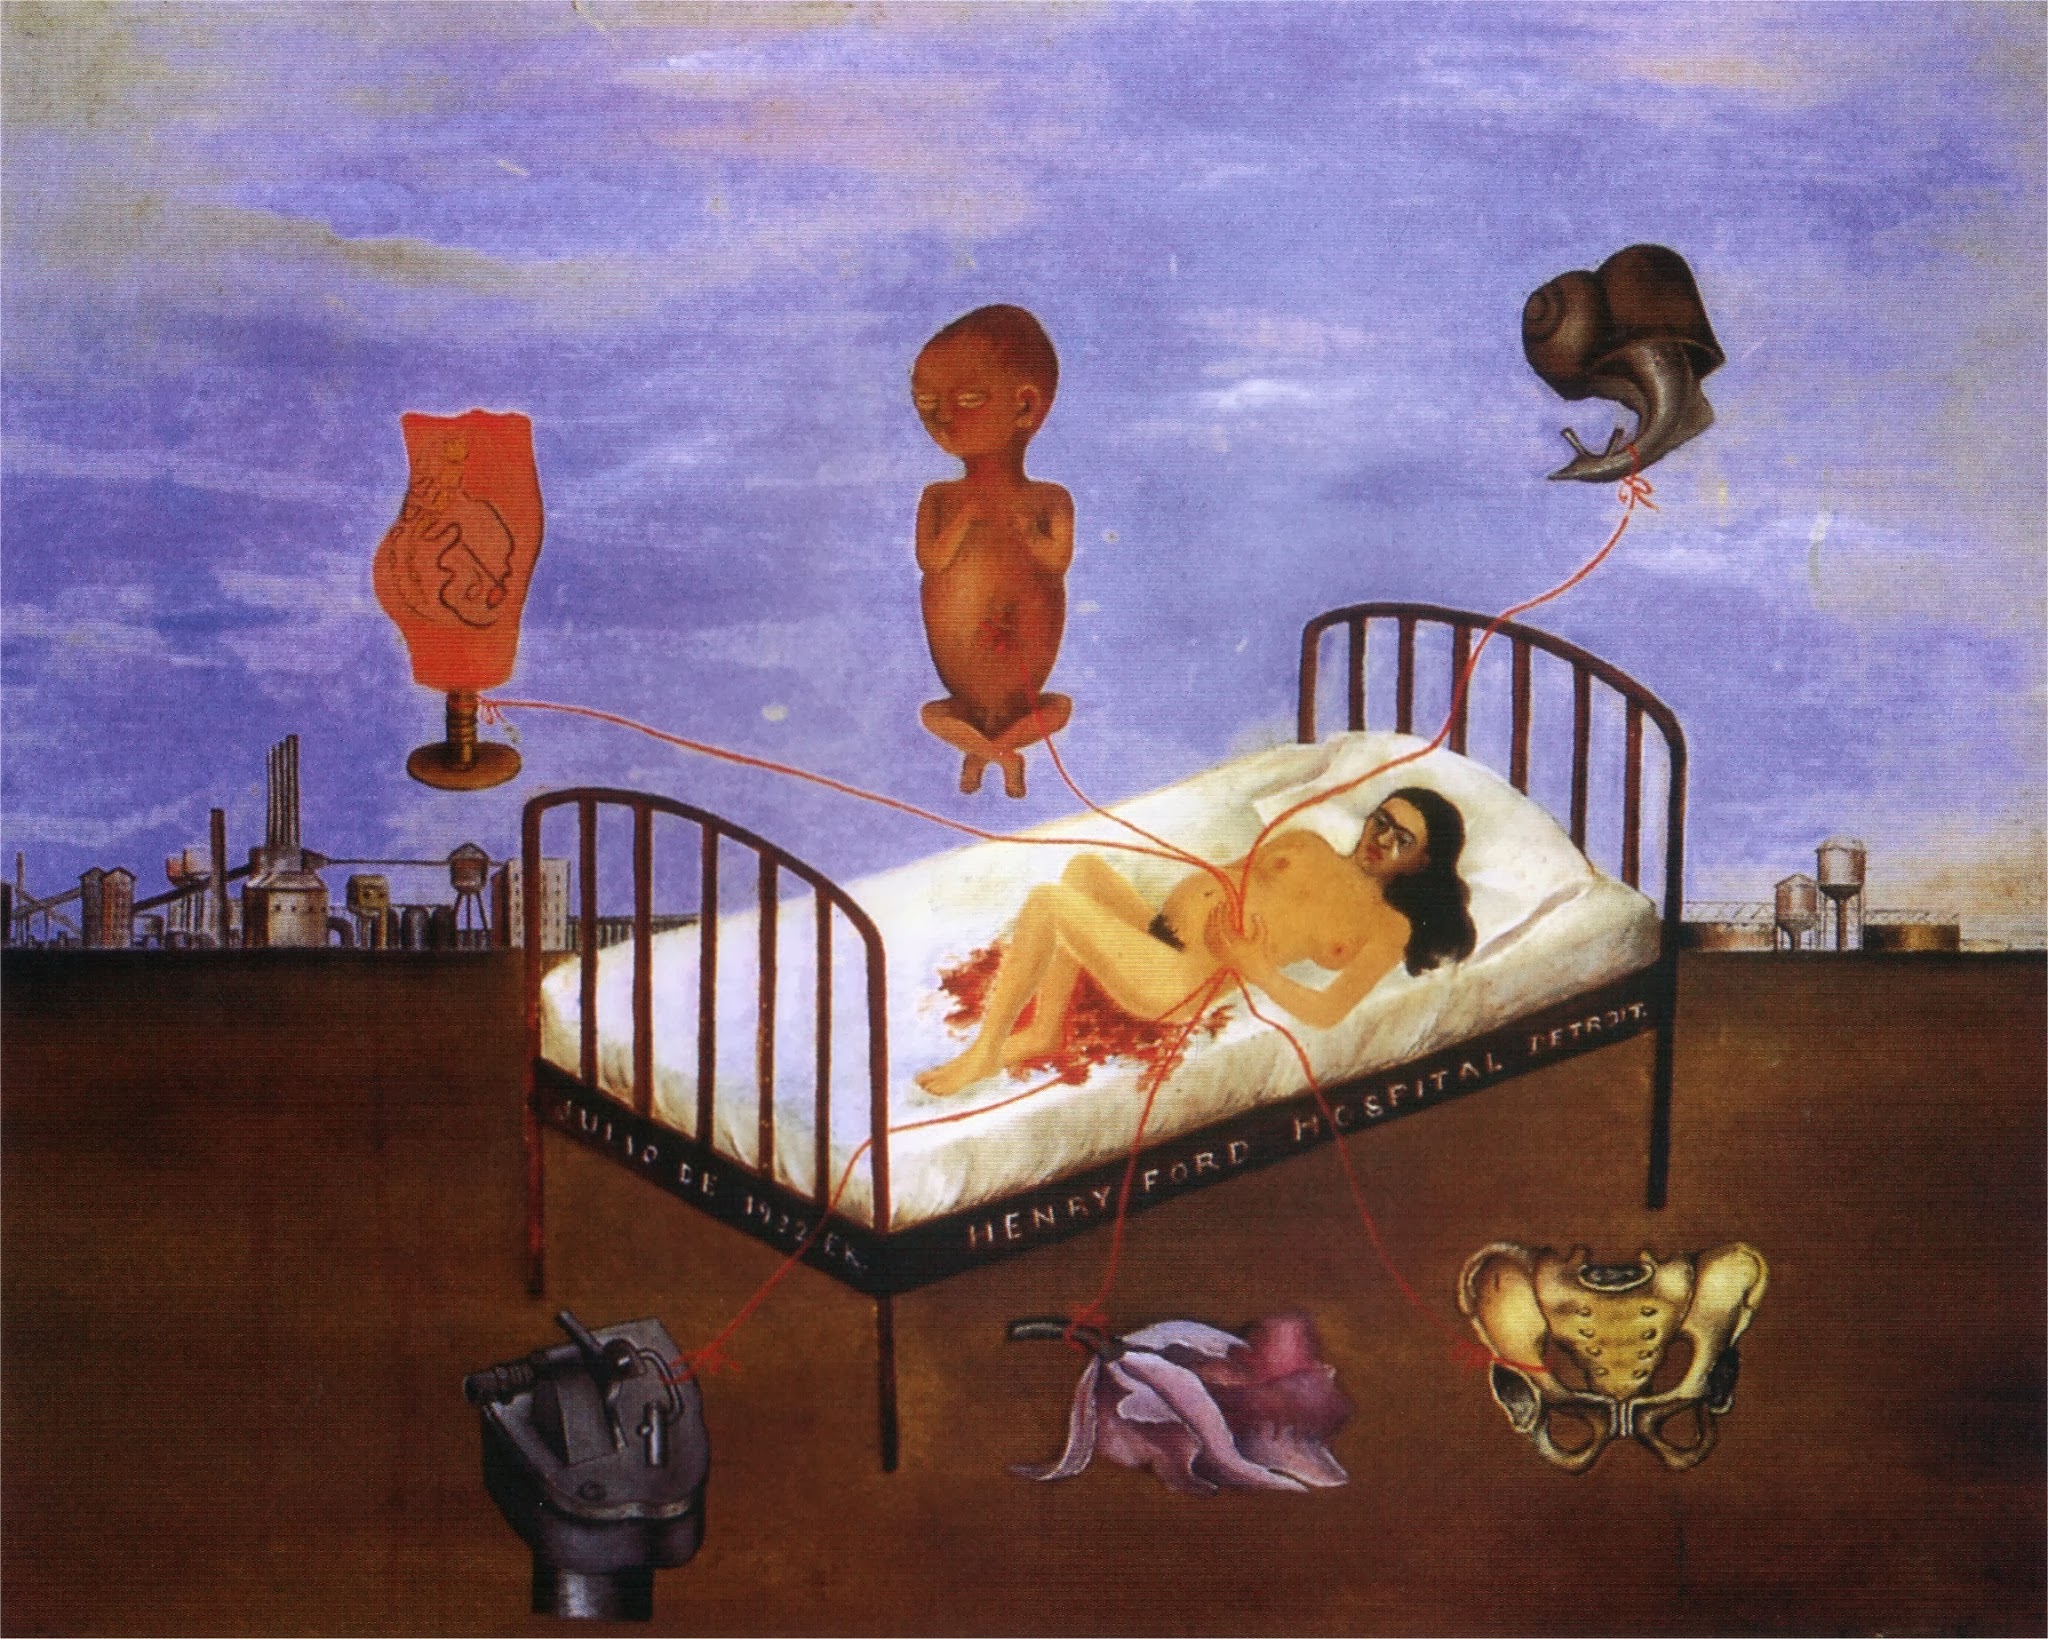 The henry ford hospital frida kahlo painting #2